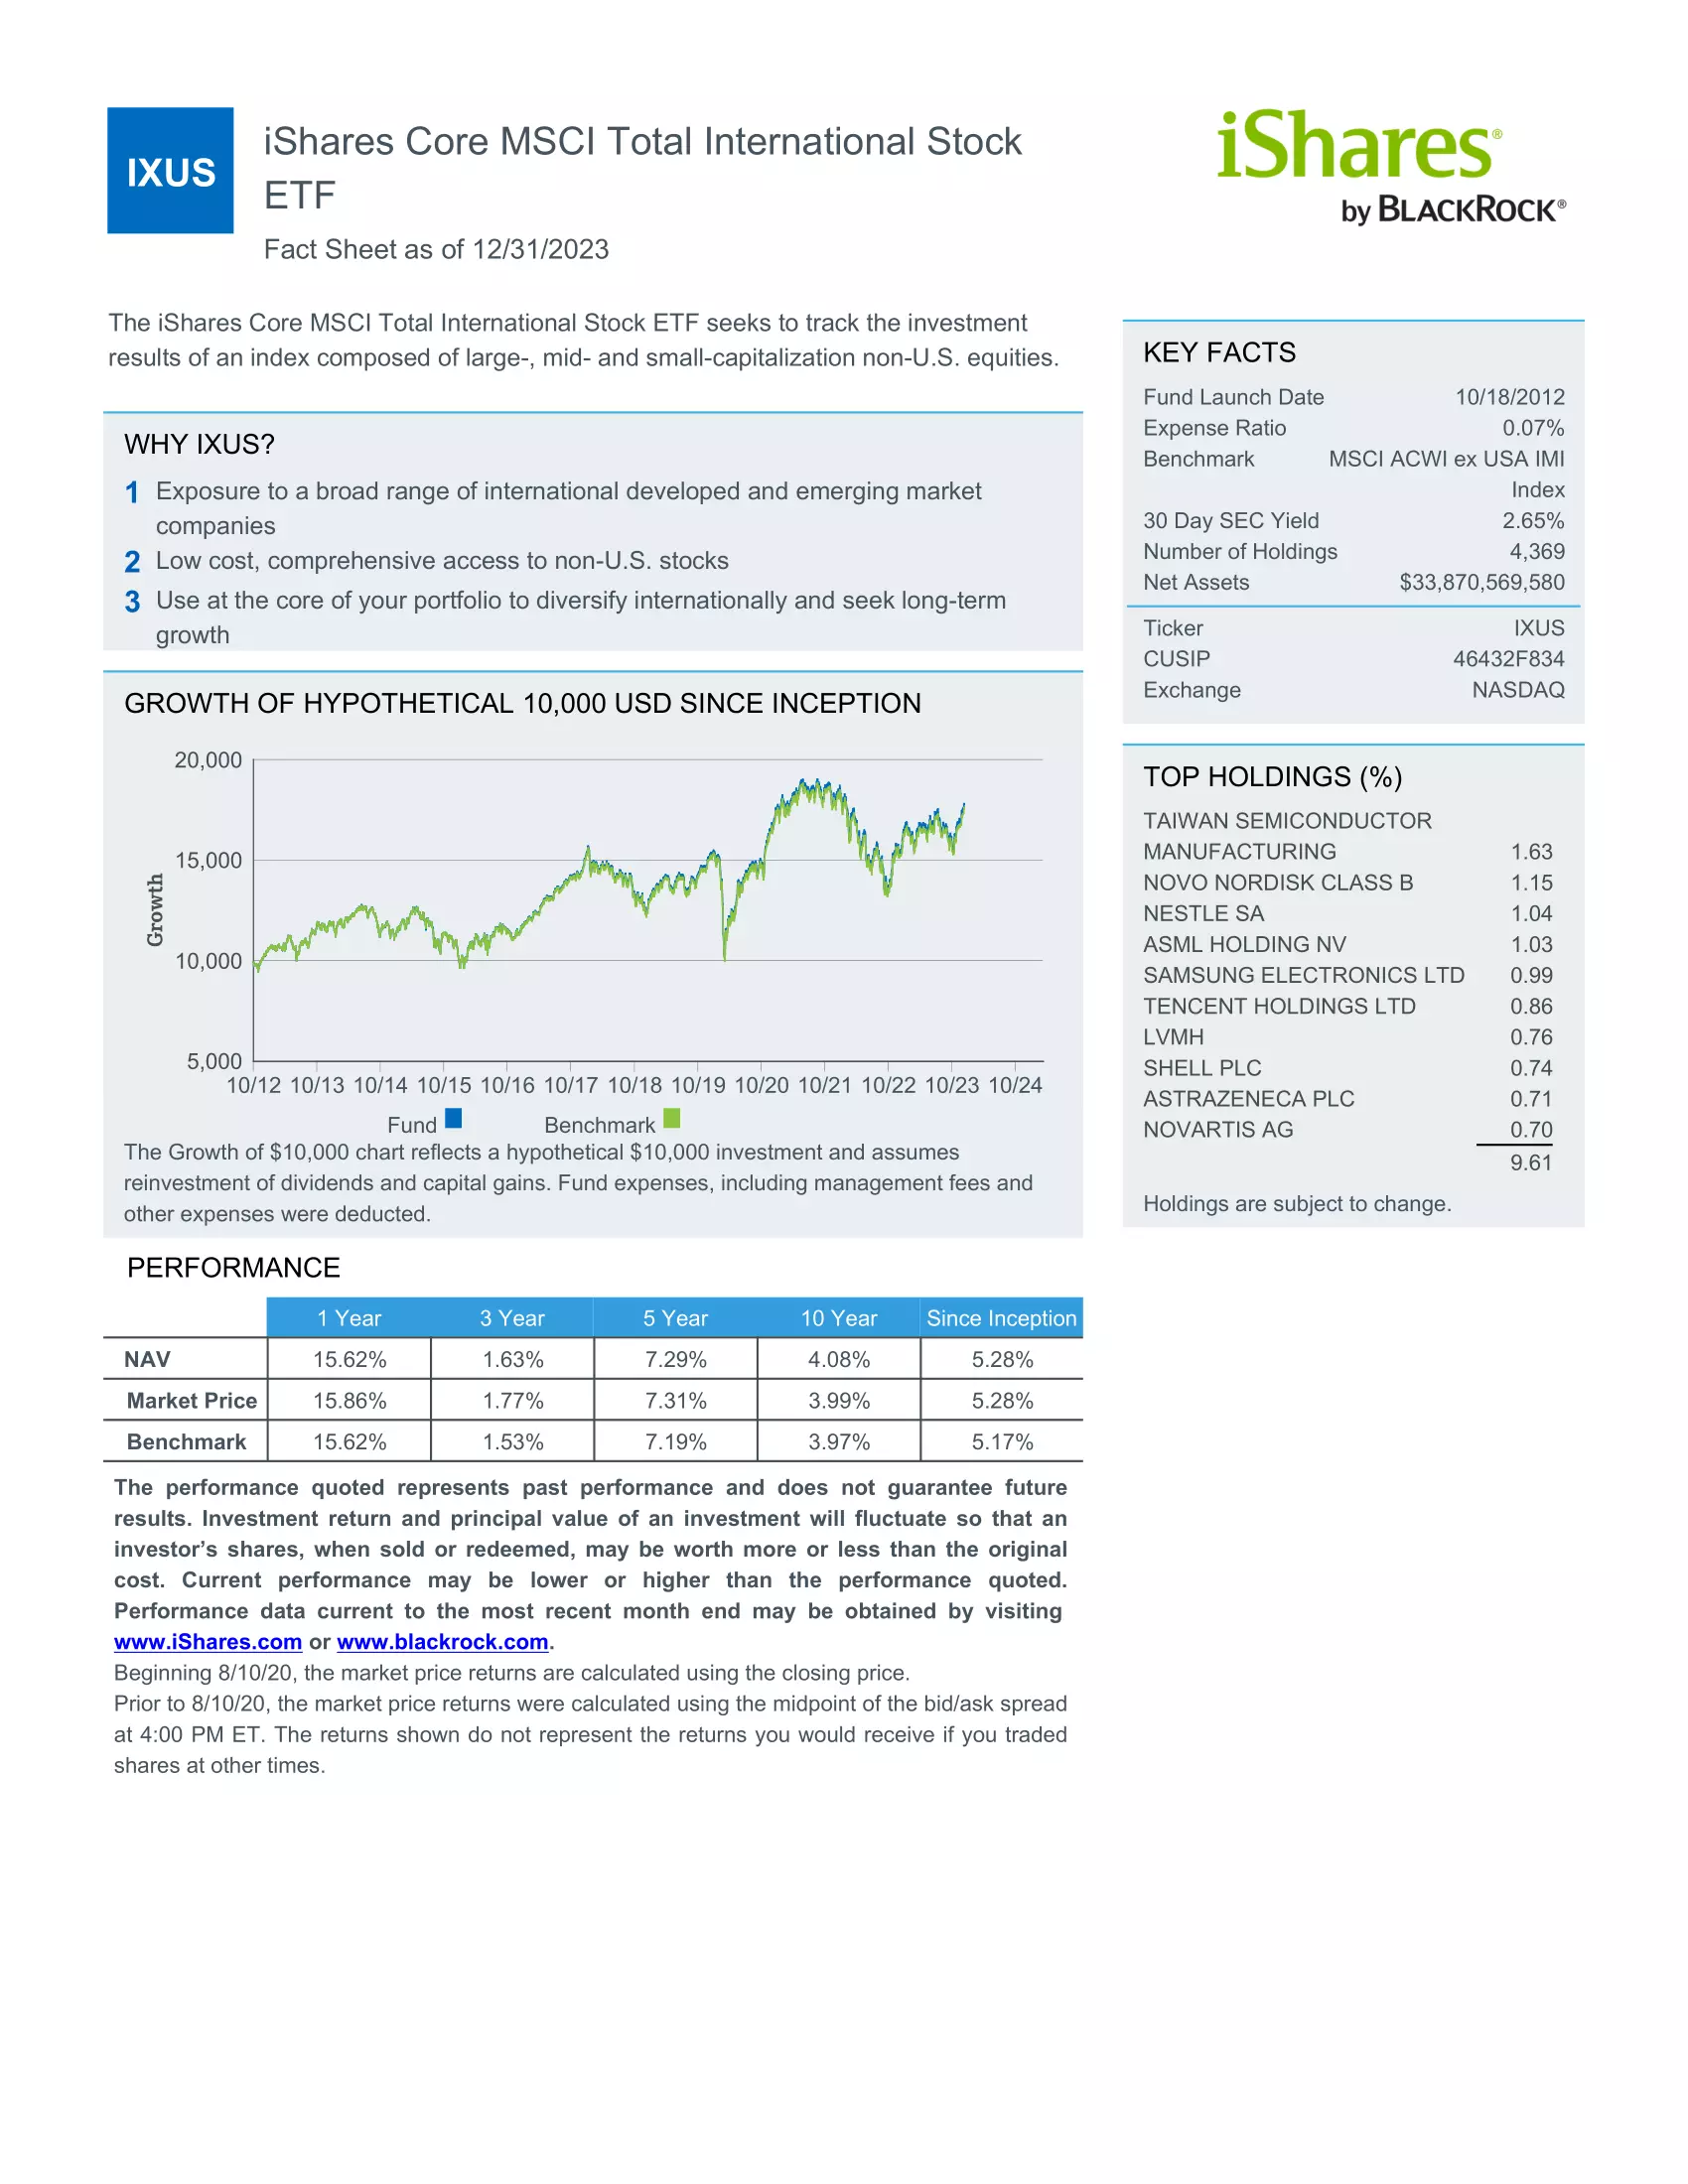 IXUS: iShares Core MSCI Total International Stock ETF